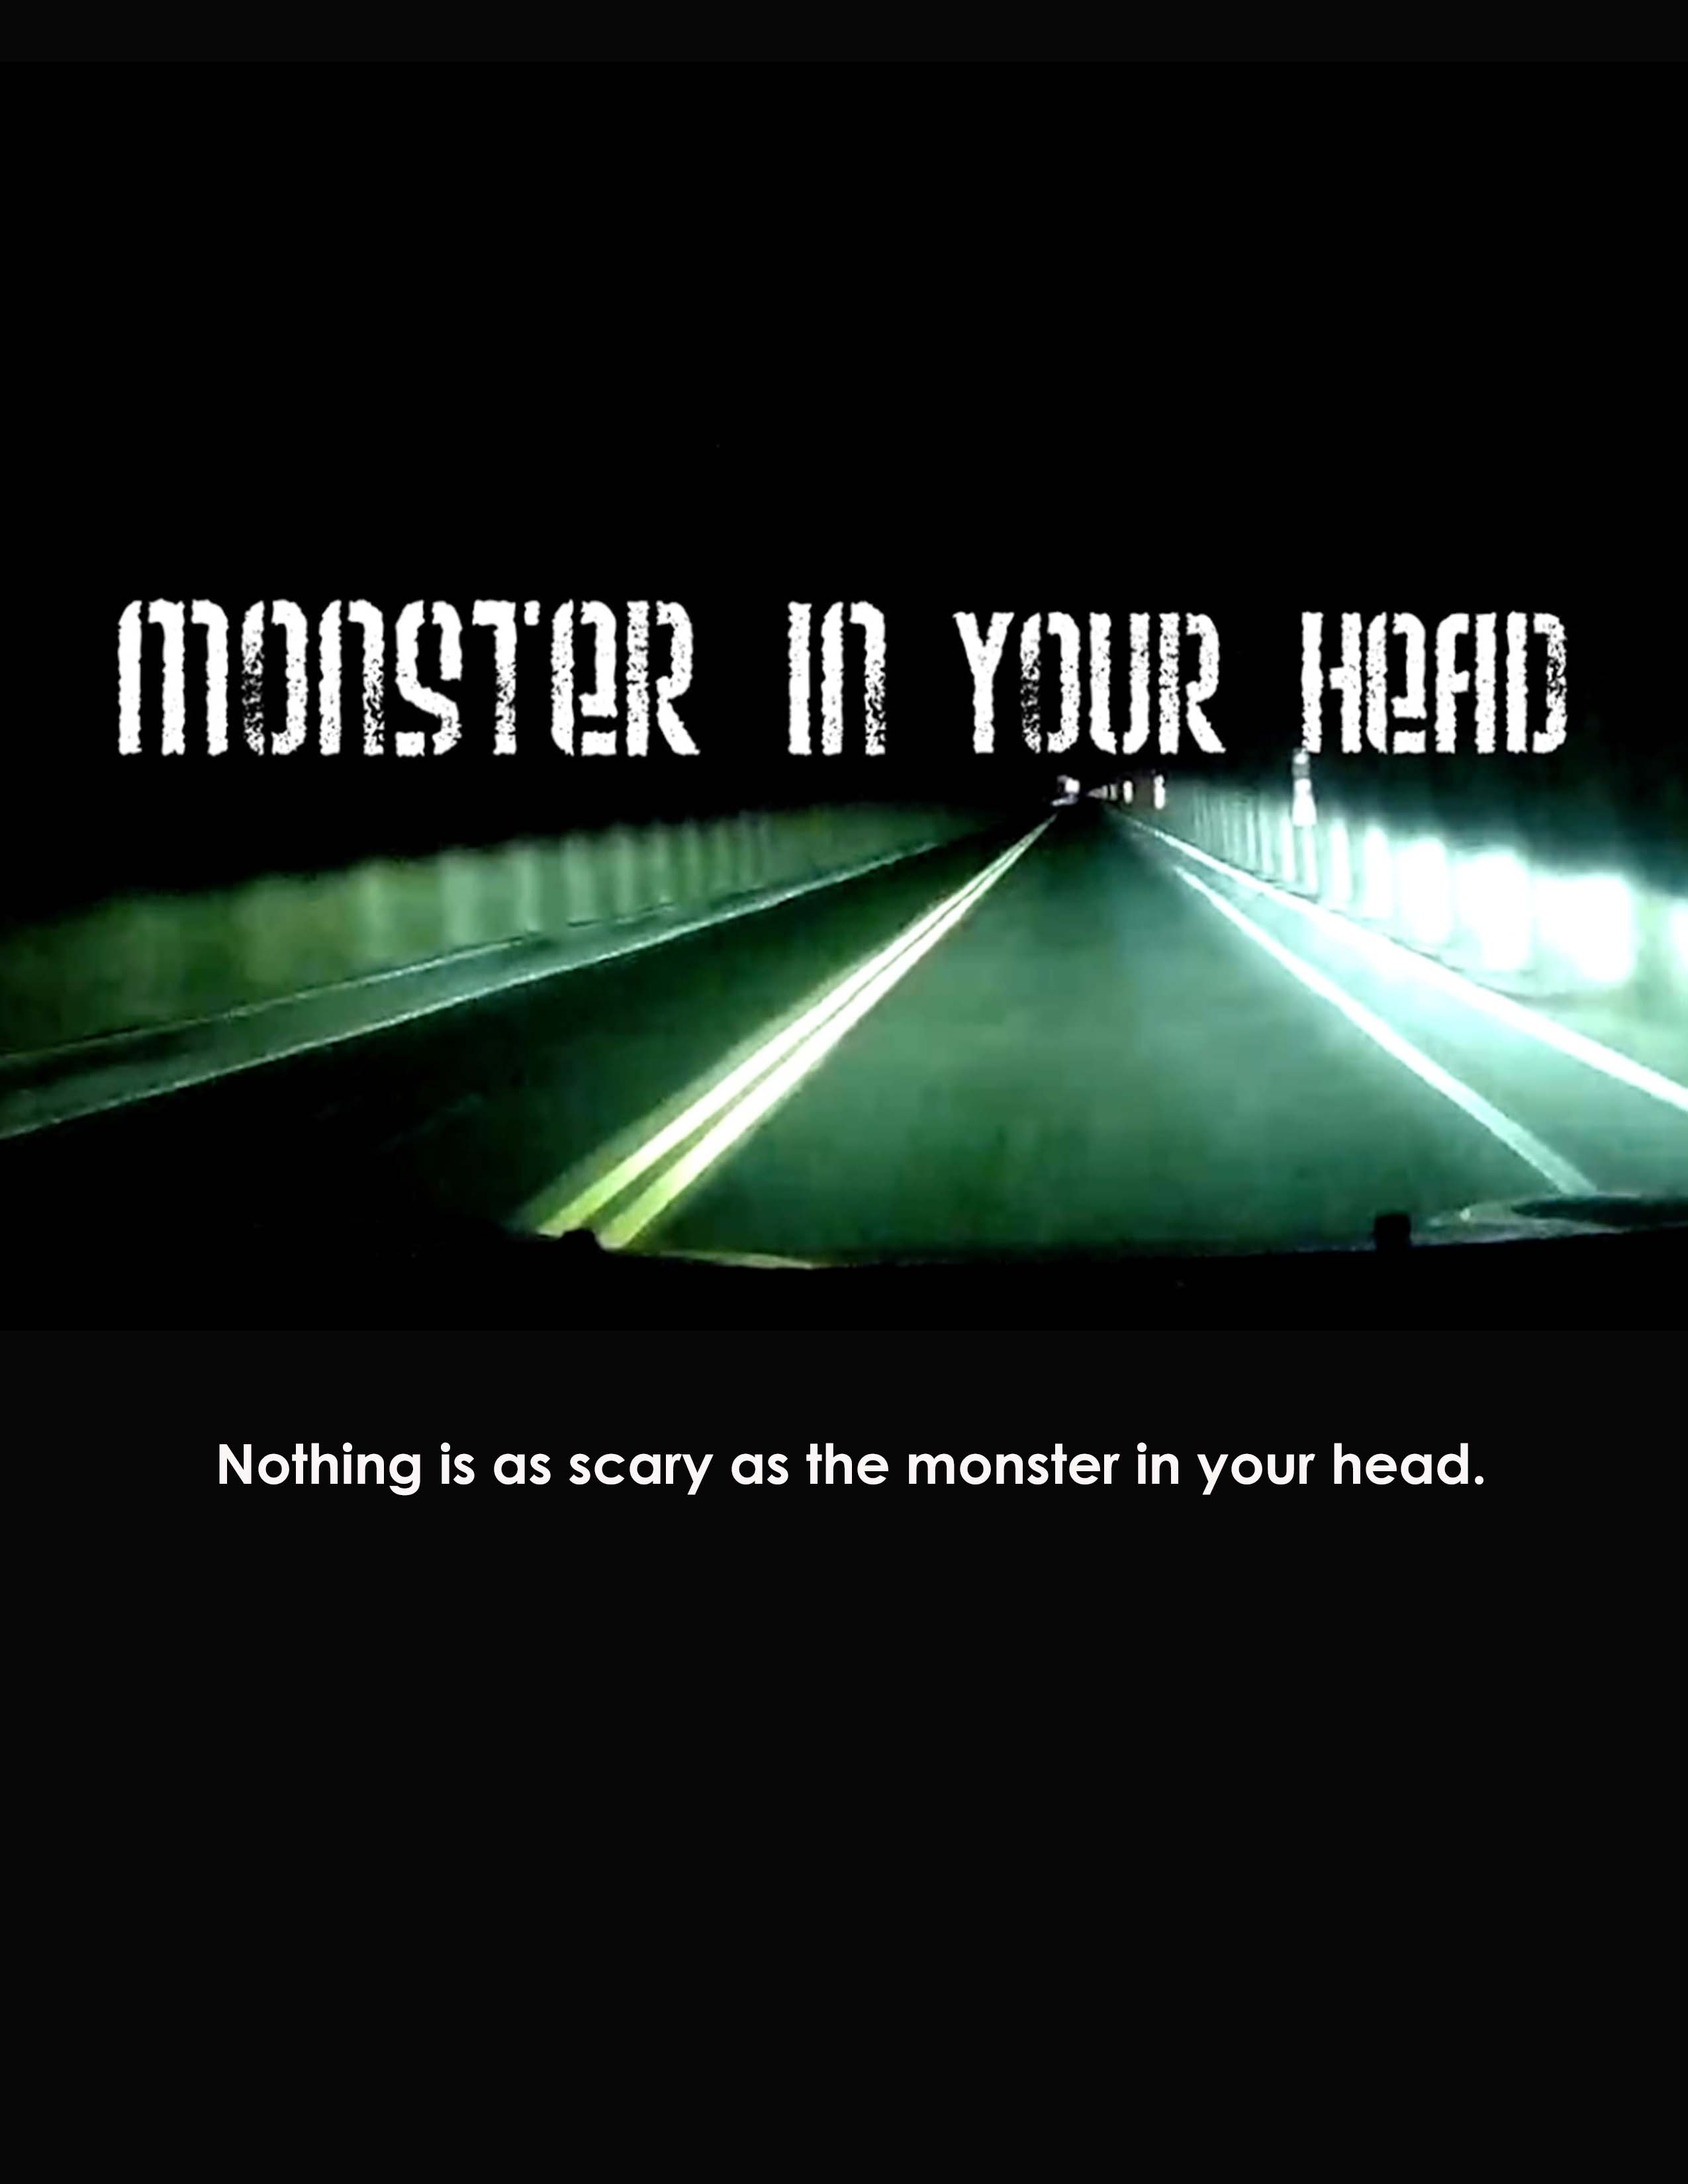 Monster in Your Head